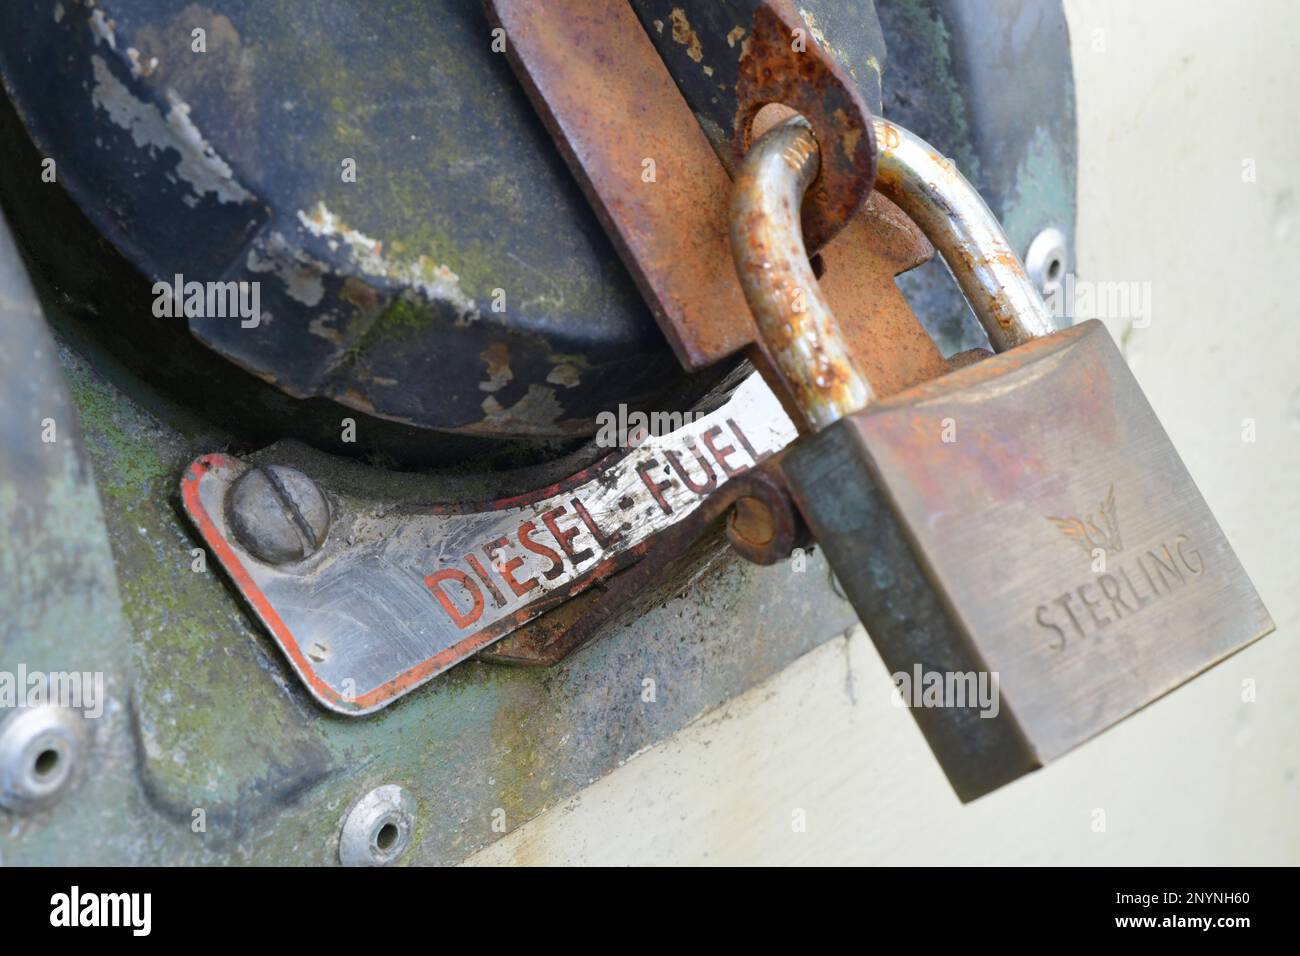 padlock on locking fuel cap on diesel engined landrover Stock Photo